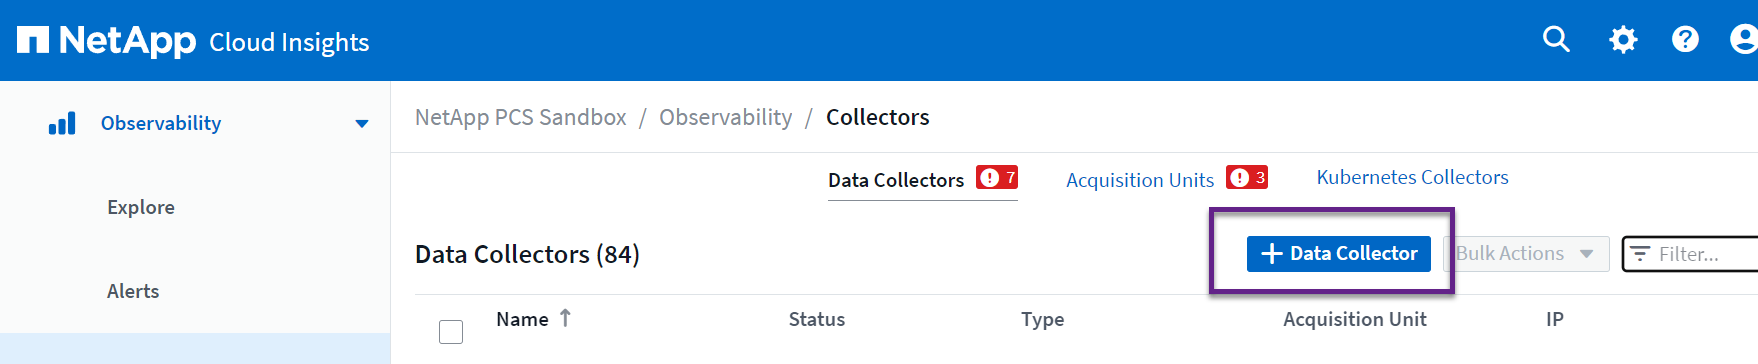 Nouveau Data Collector